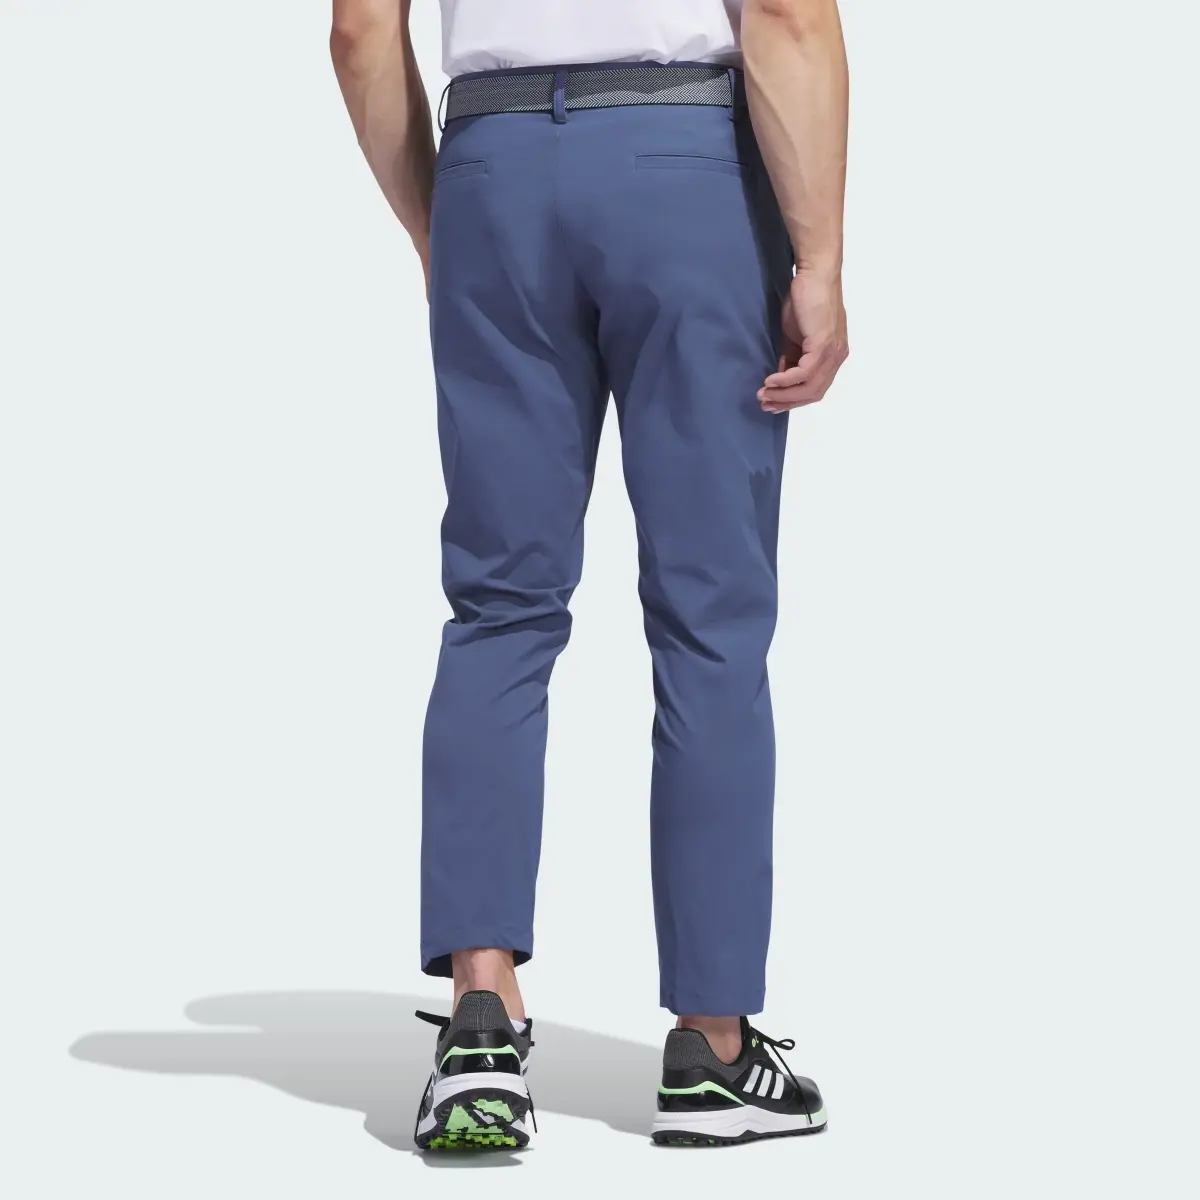 Adidas Ultimate365 Chino Pants. 2